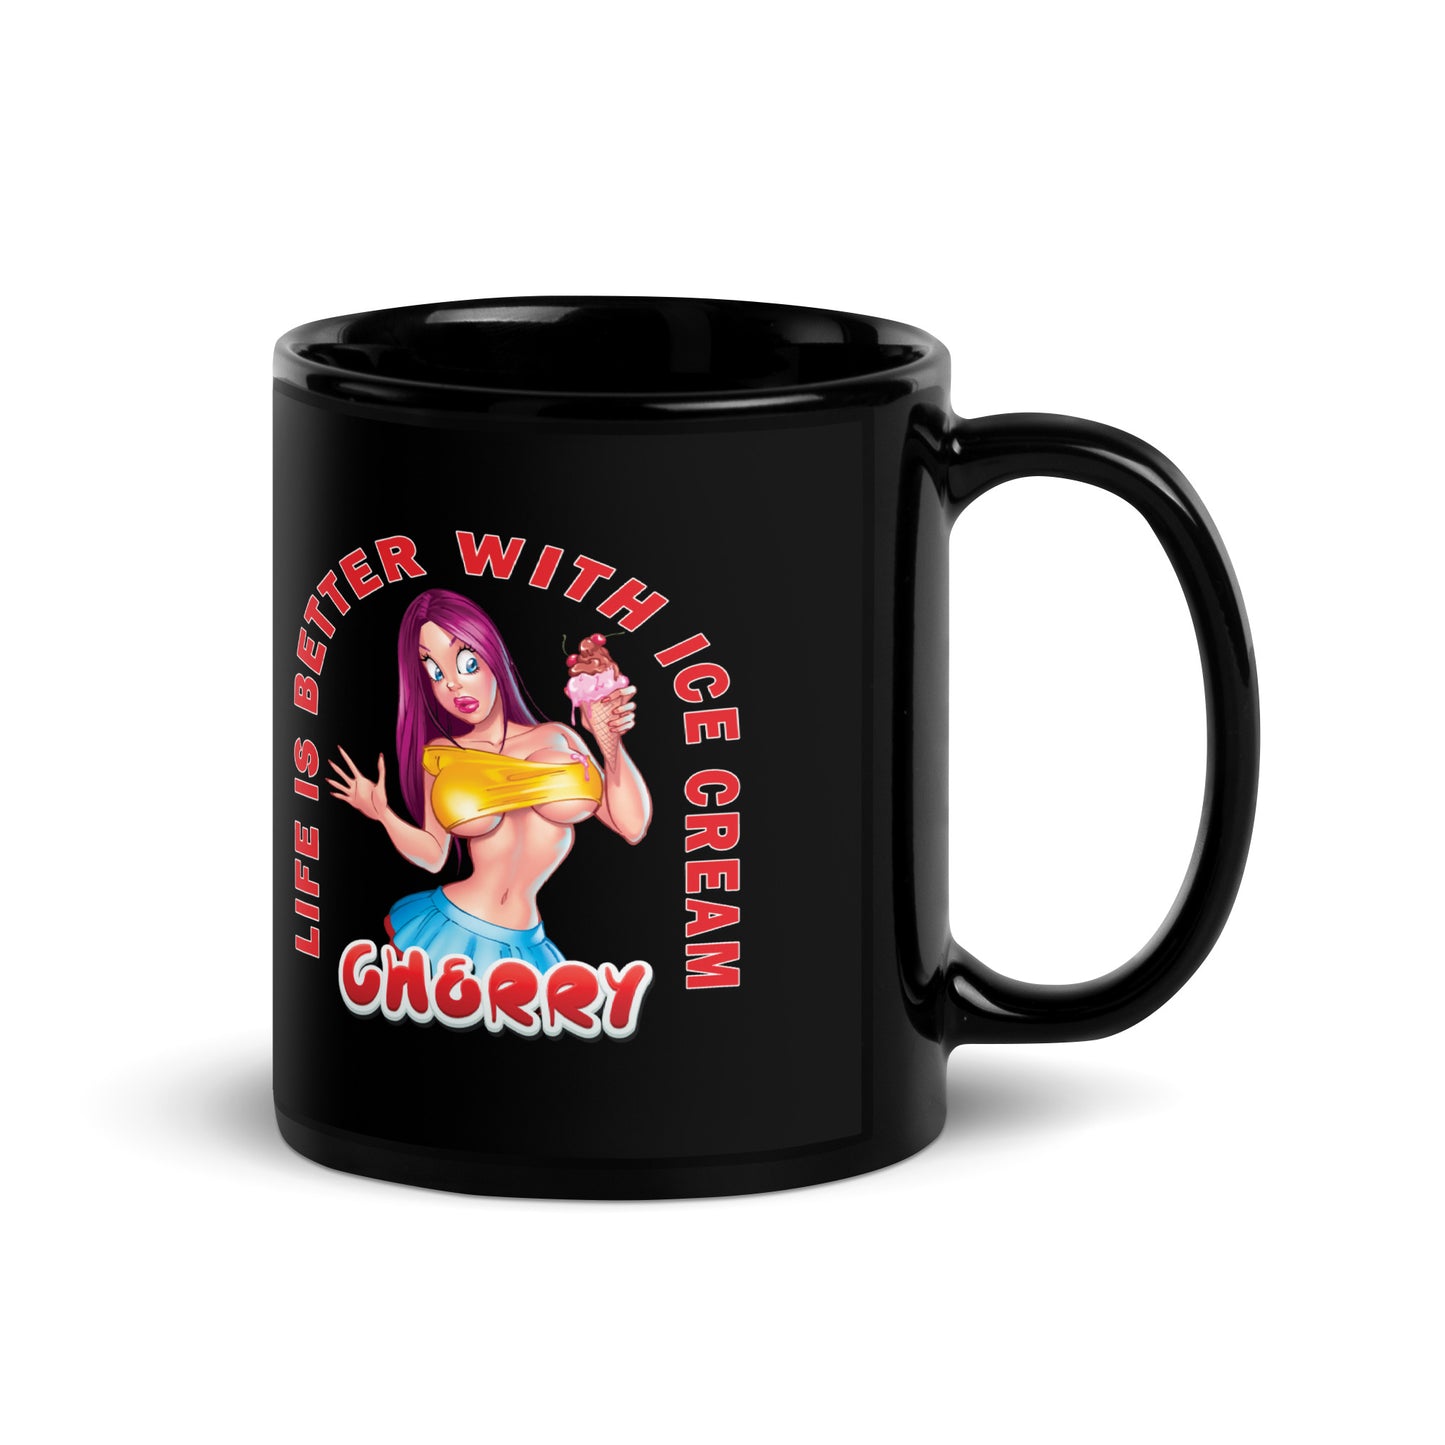 Cherry Coffee Mug